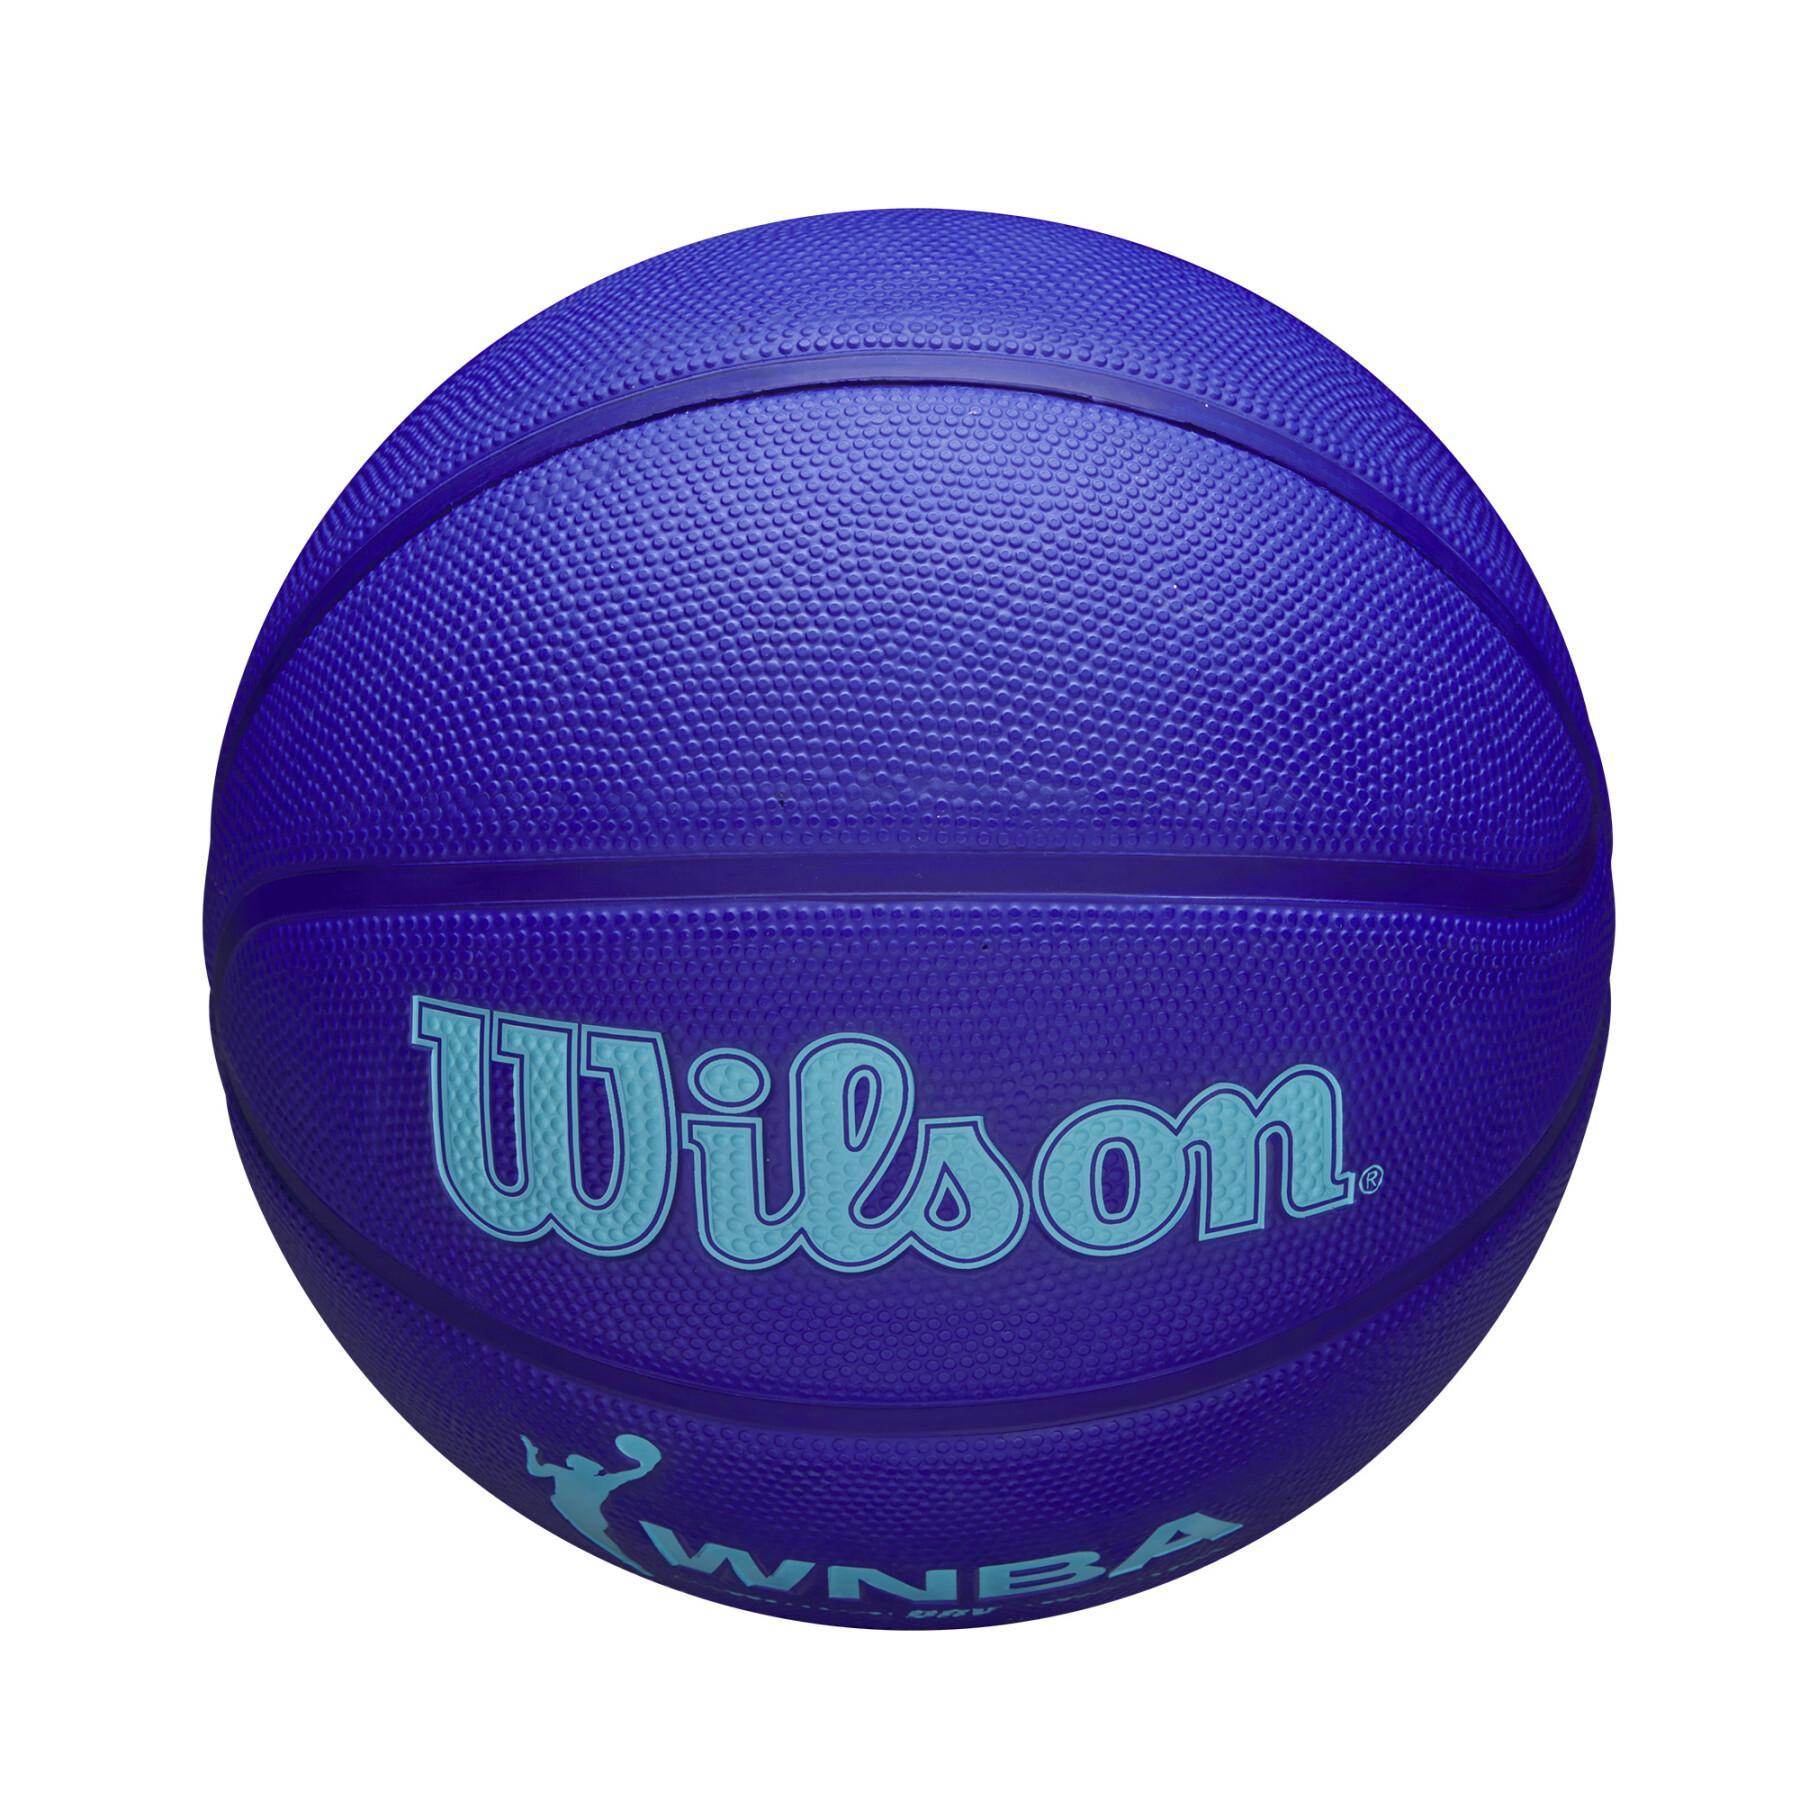 Ballon Wilson WNBA Drive